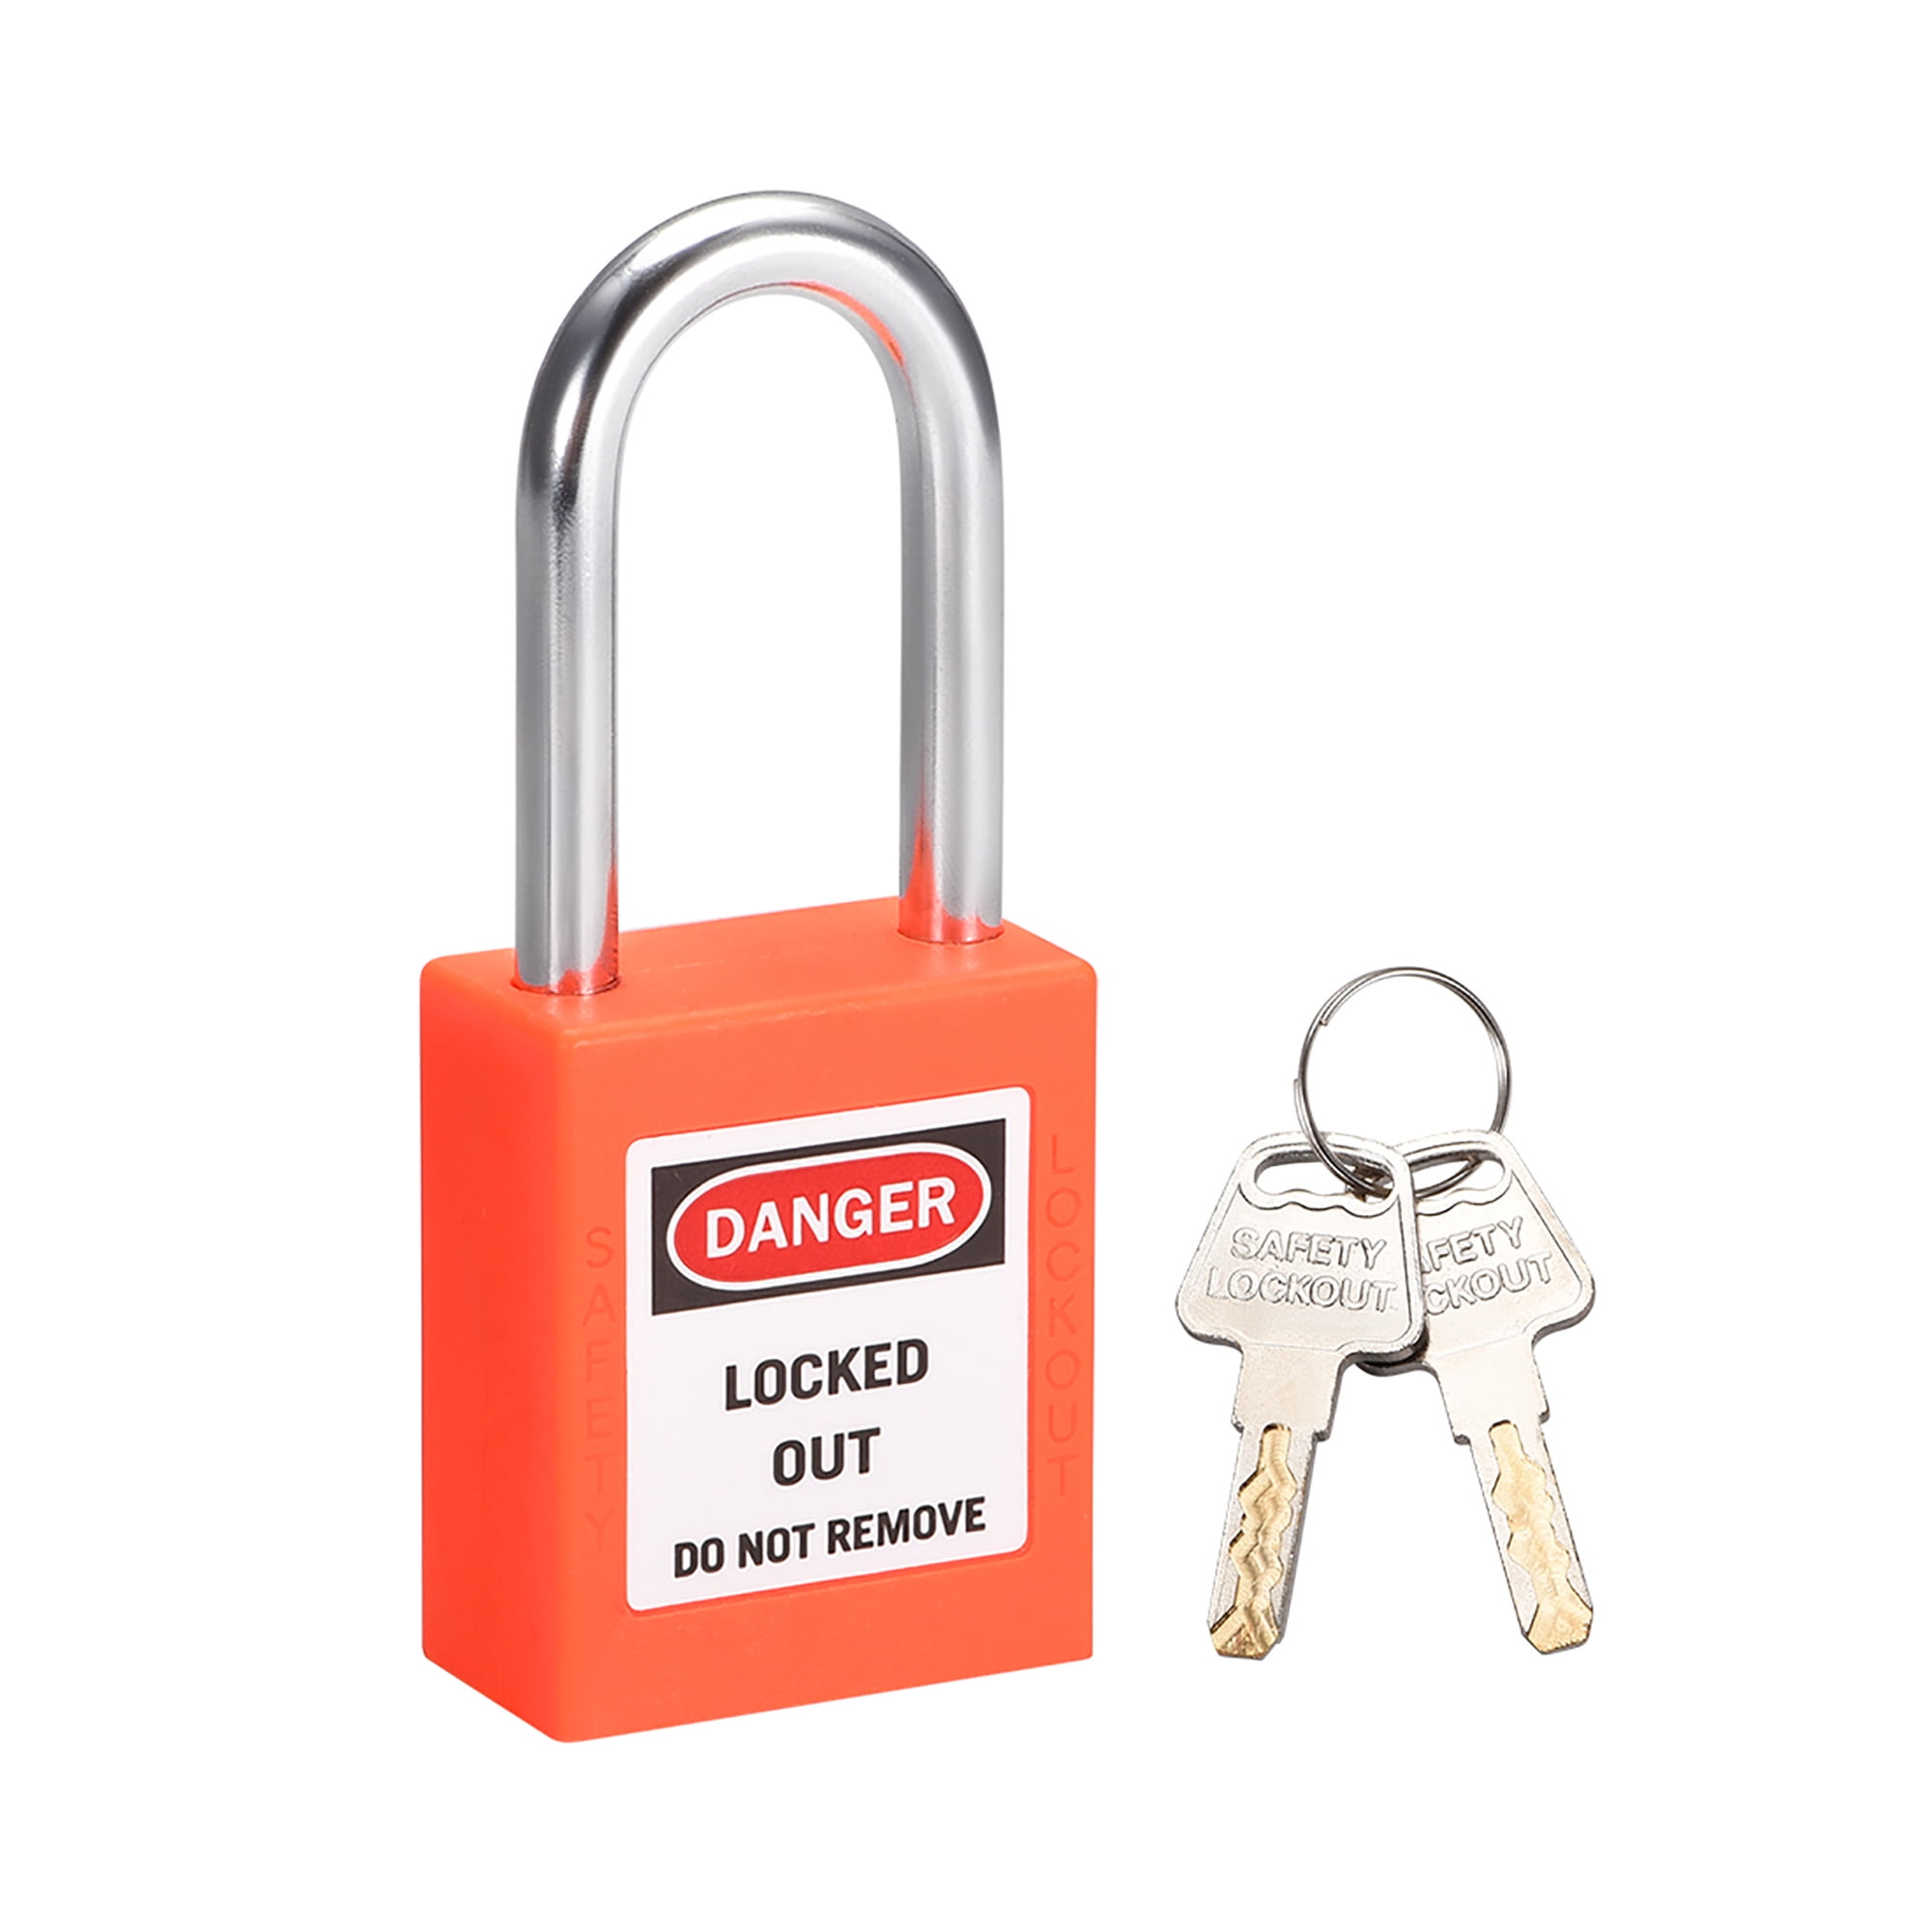 Lockout Tagout Locks 1-1/2 Inch Shackle Key Different Safety Padlock Lock Orange 